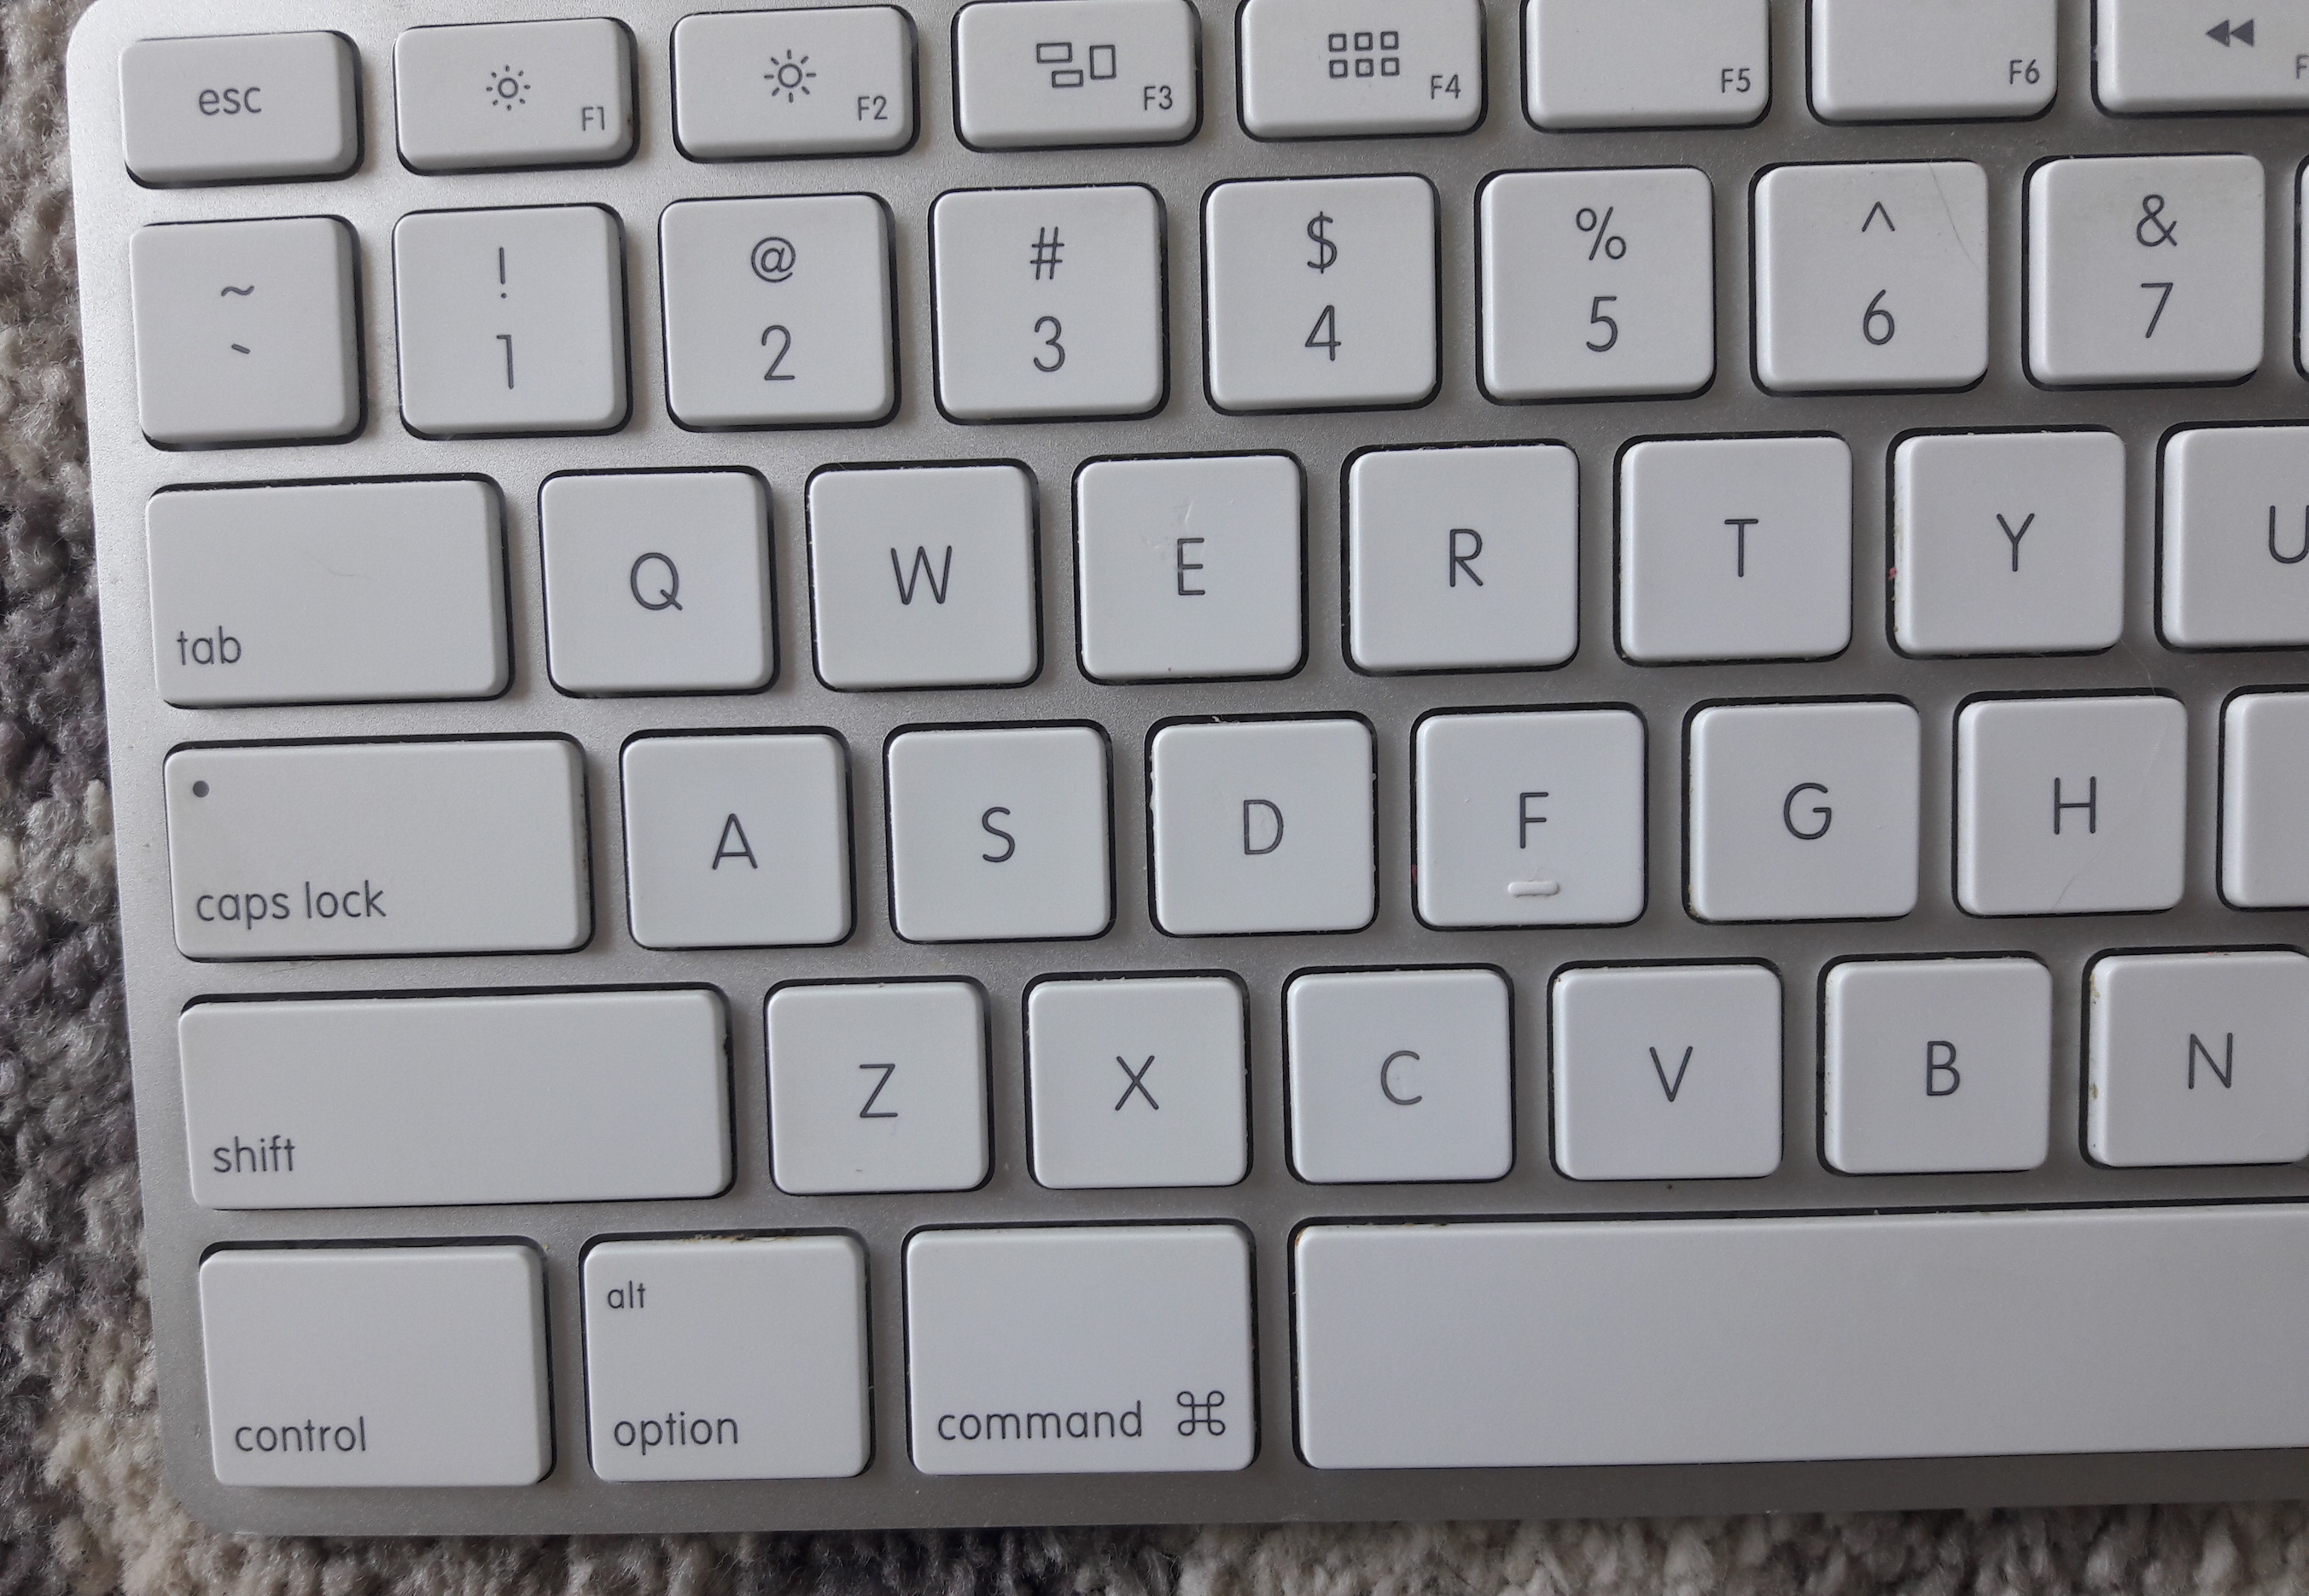 mac keyboard layout